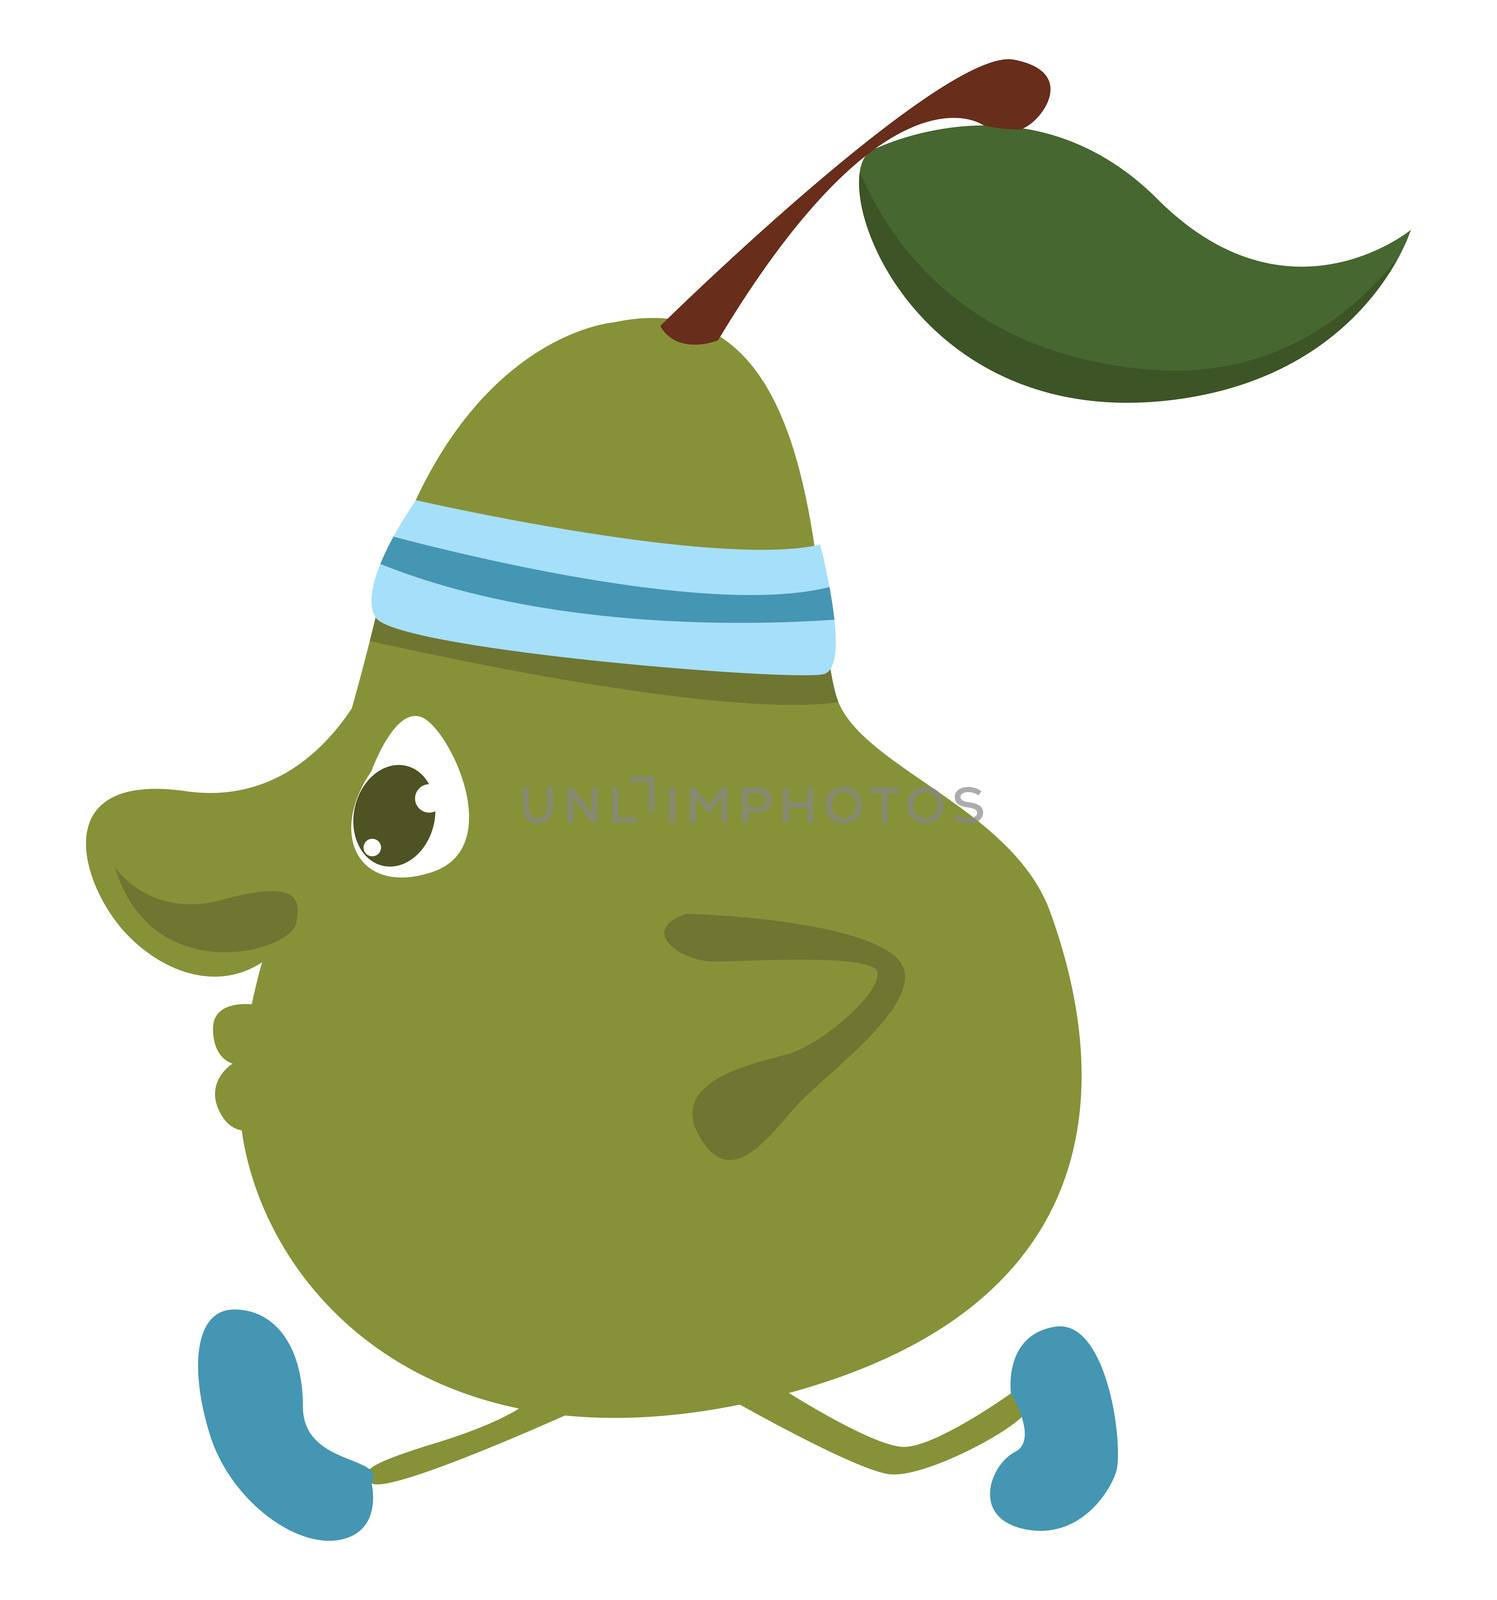 Running pear , illustration, vector on white background